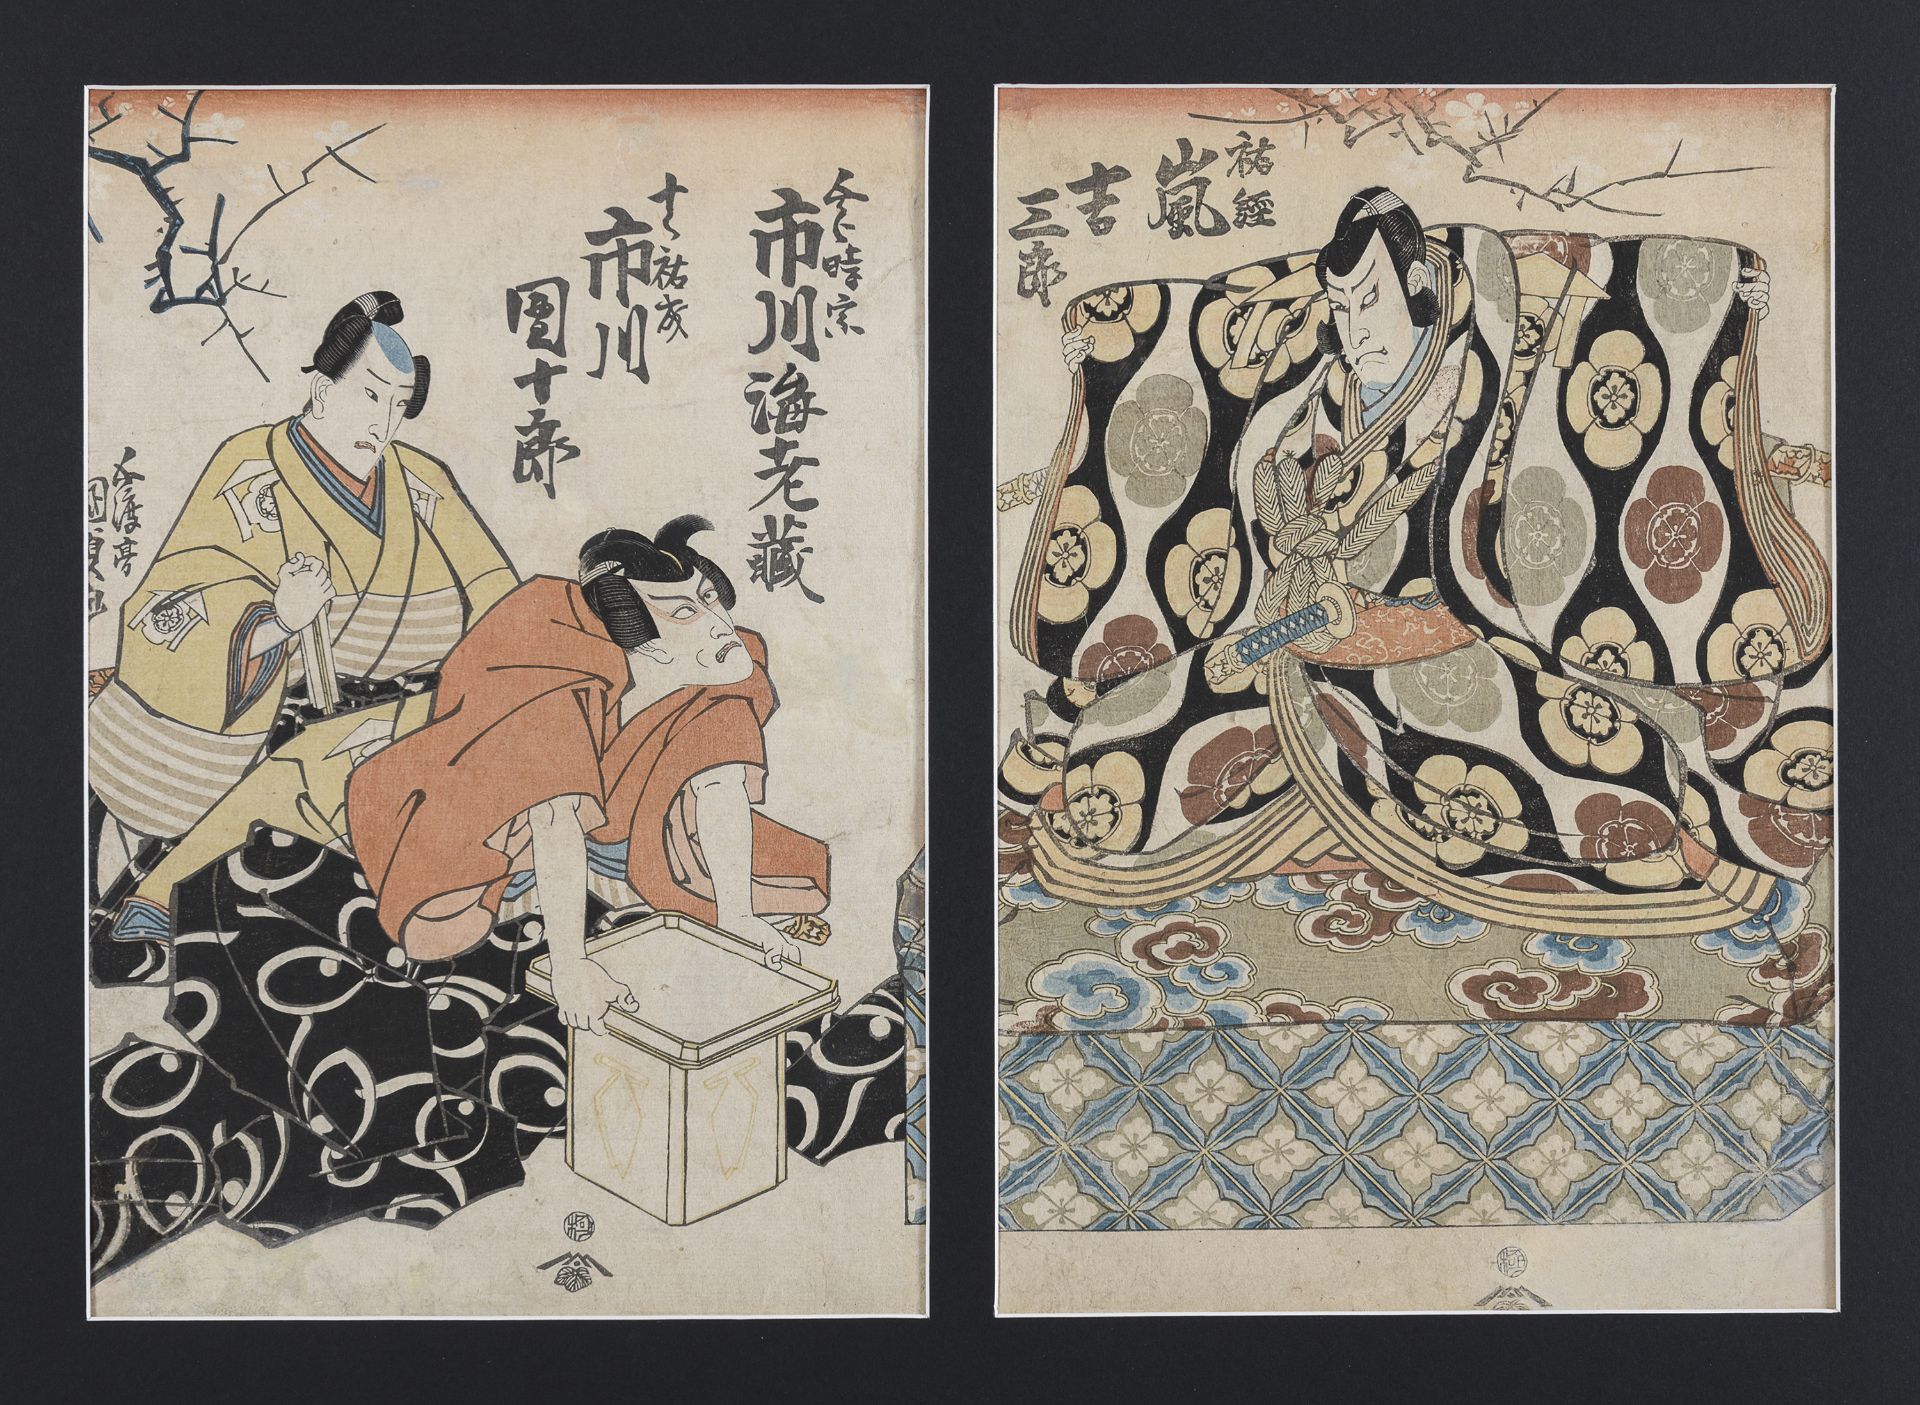 TWO JAPANESE POLYCHROME WOODBLOCK PRINTS ON PAPER BY UTAGAWA KUNISADA.